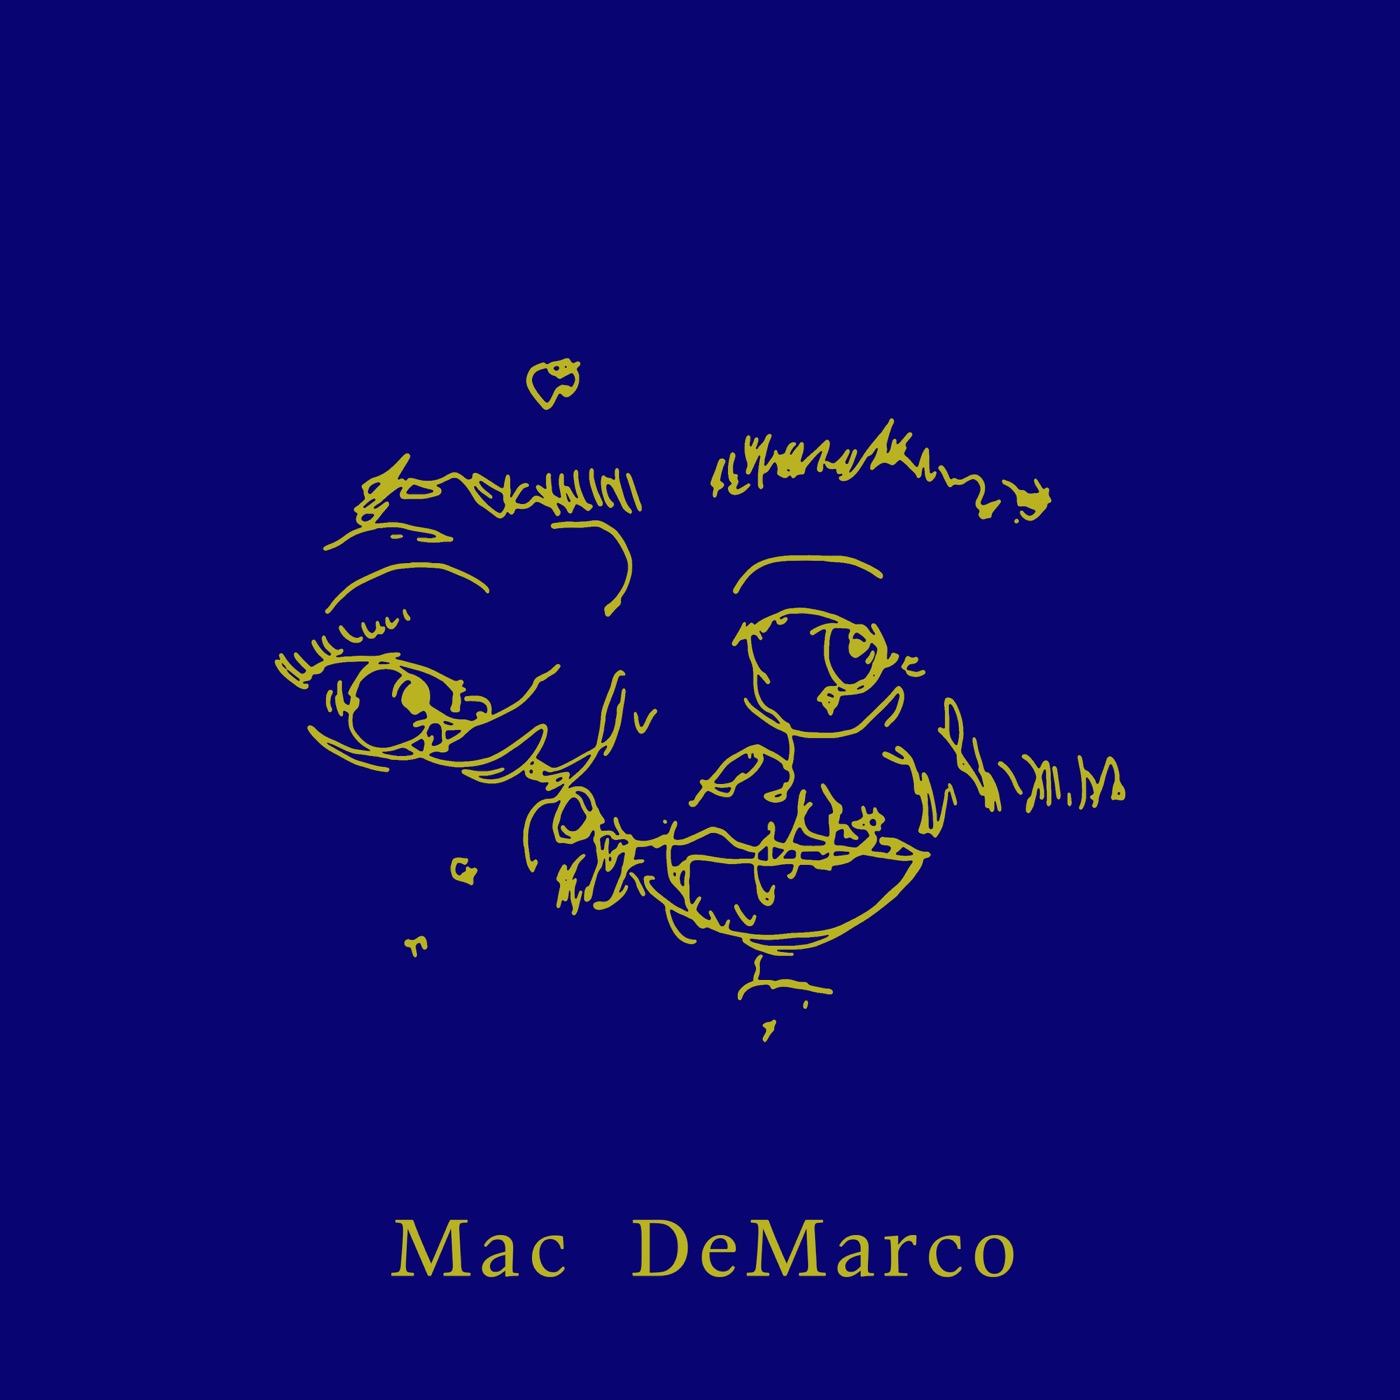 One Wayne G by Mac DeMarco